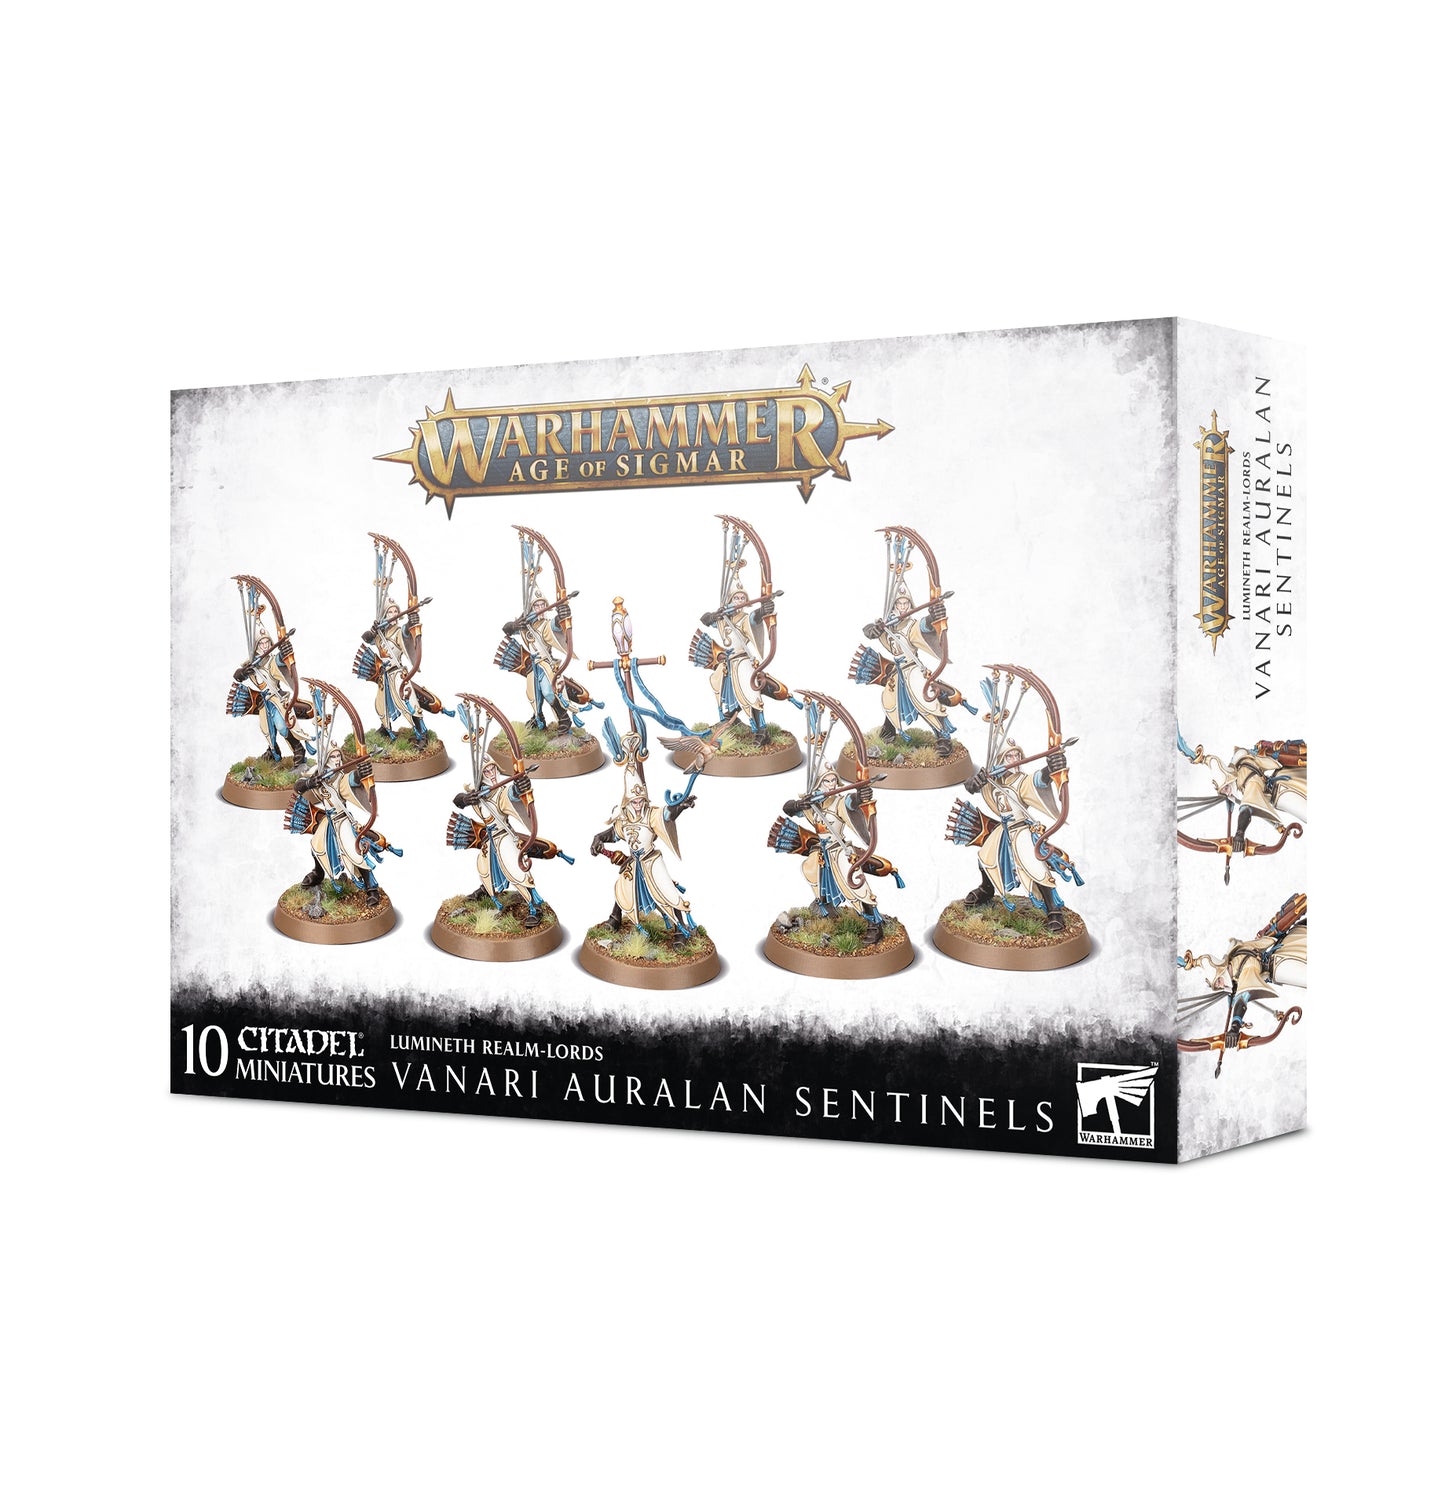 Warhammer AoS - Lumineth Realm Lords Vanari Auralan Sentinels